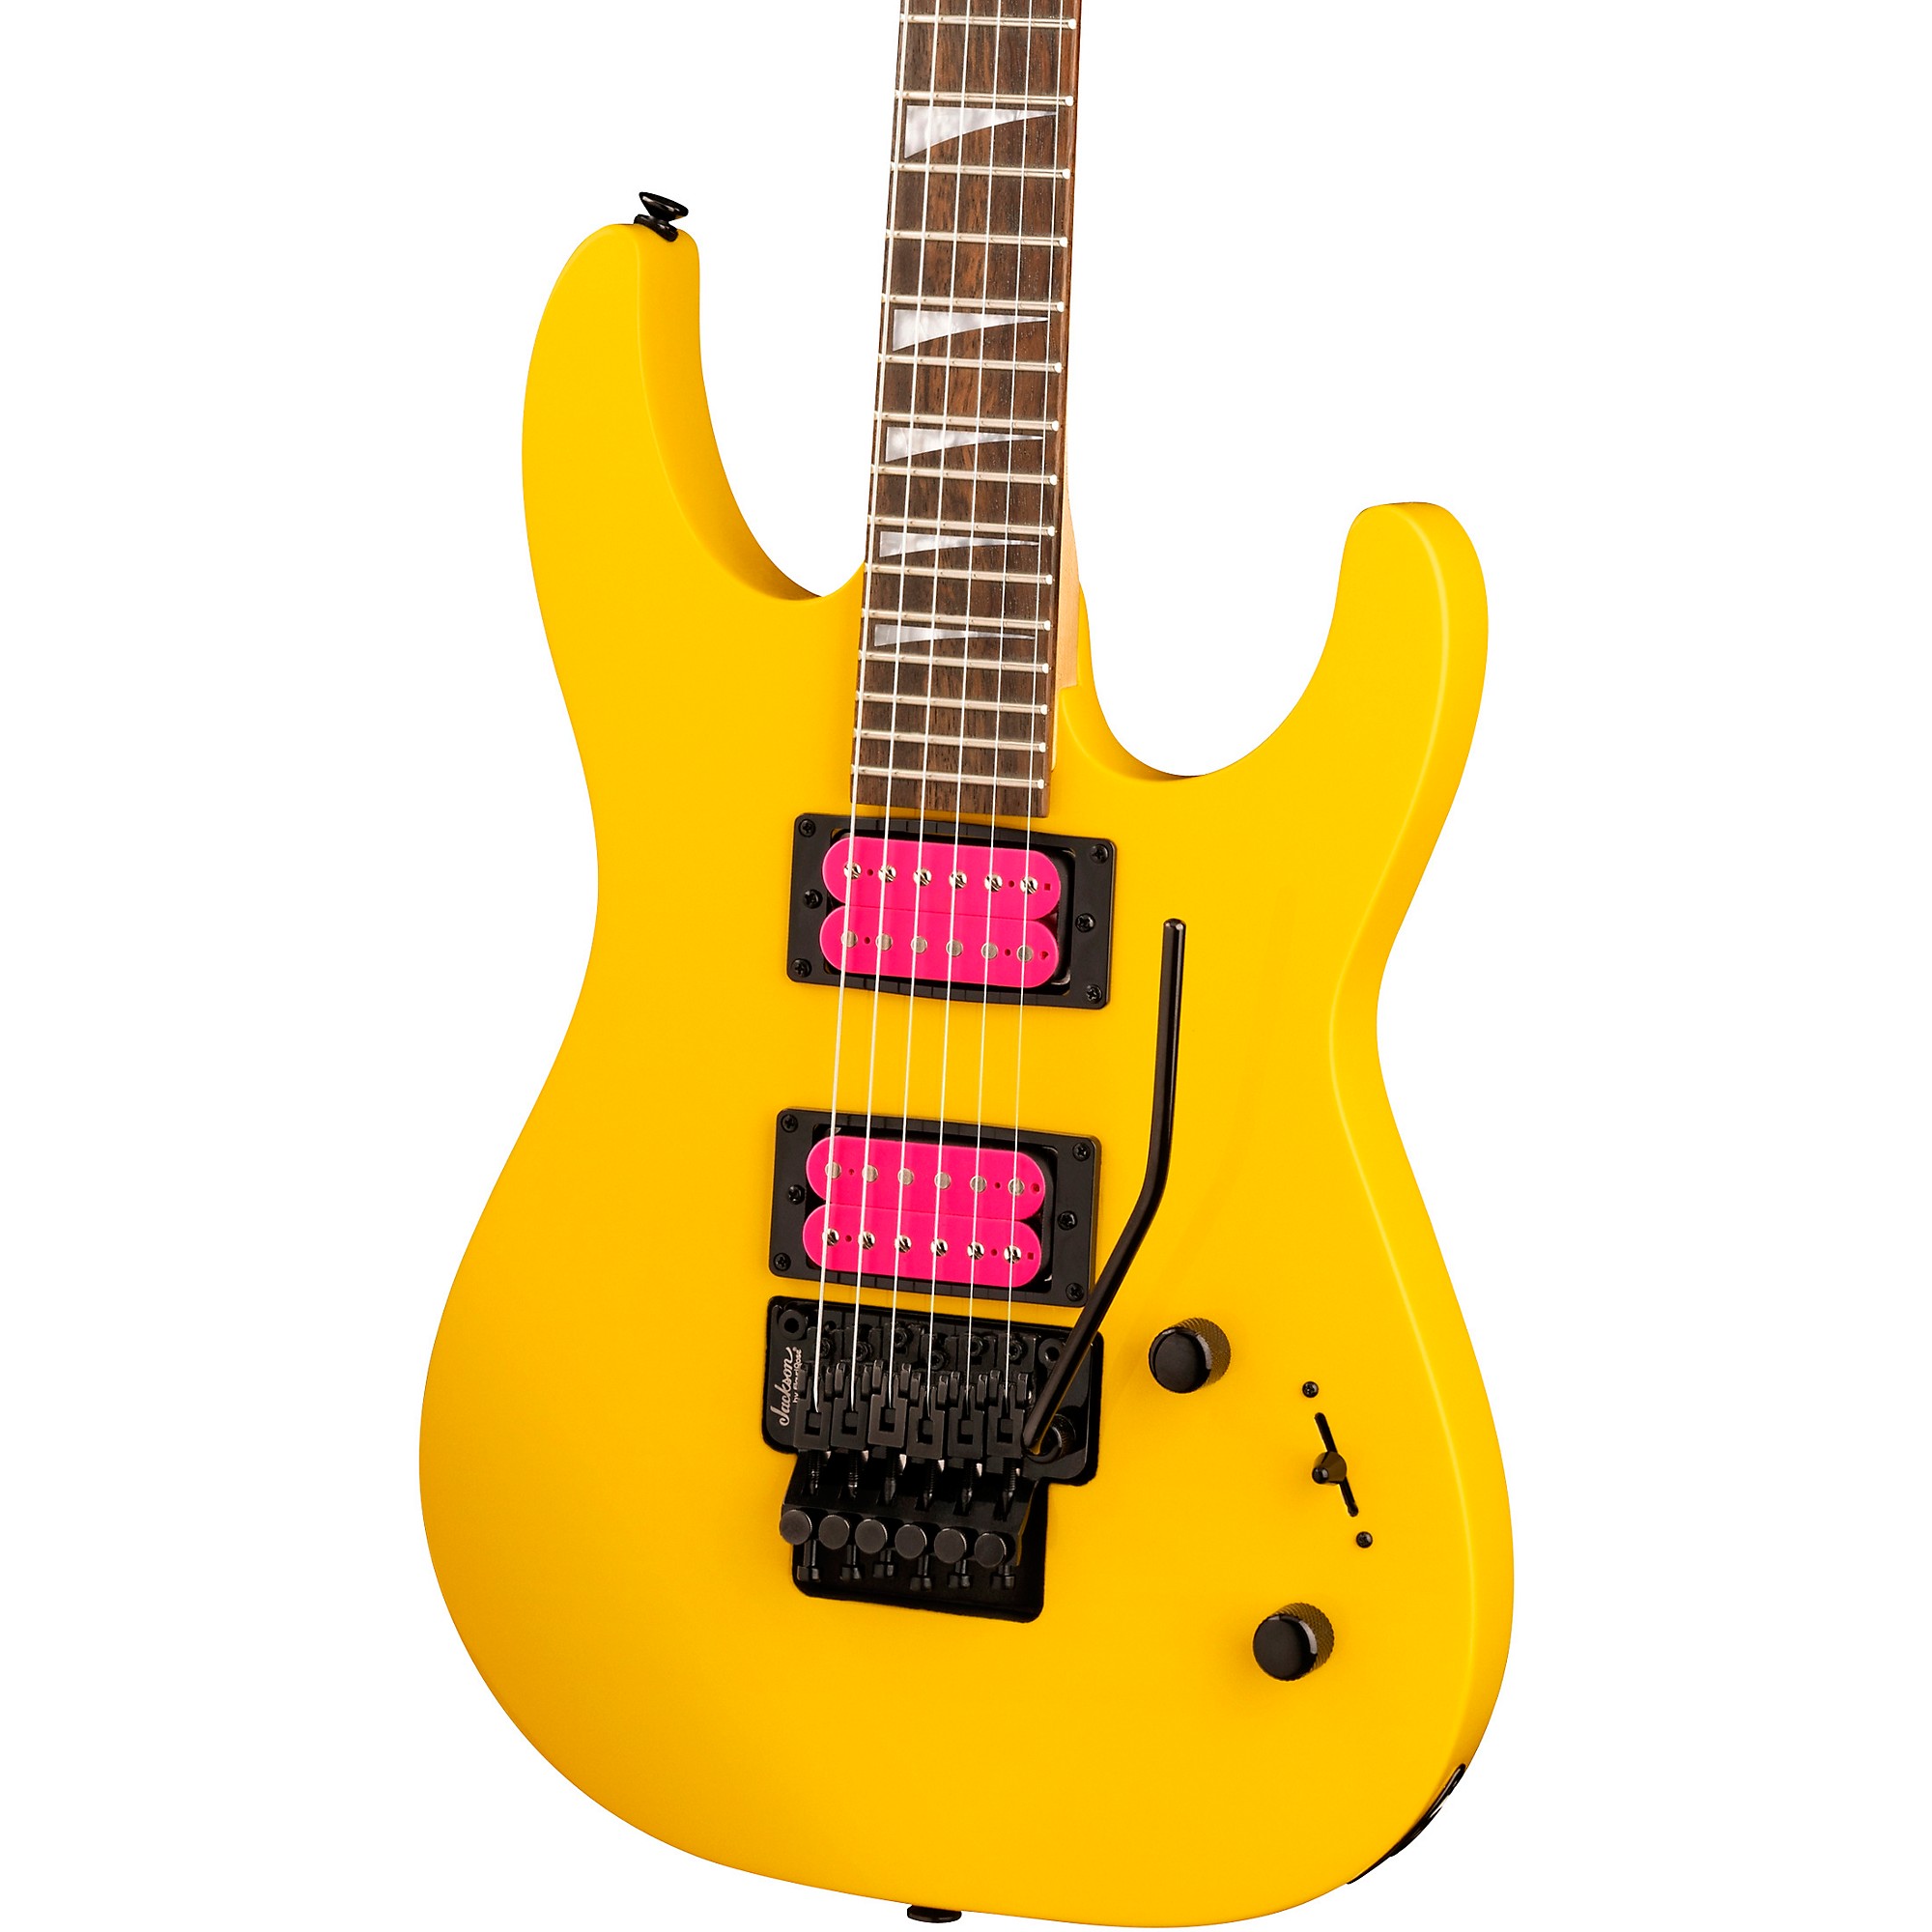 Jackson Caution Yellow | Guitar Center